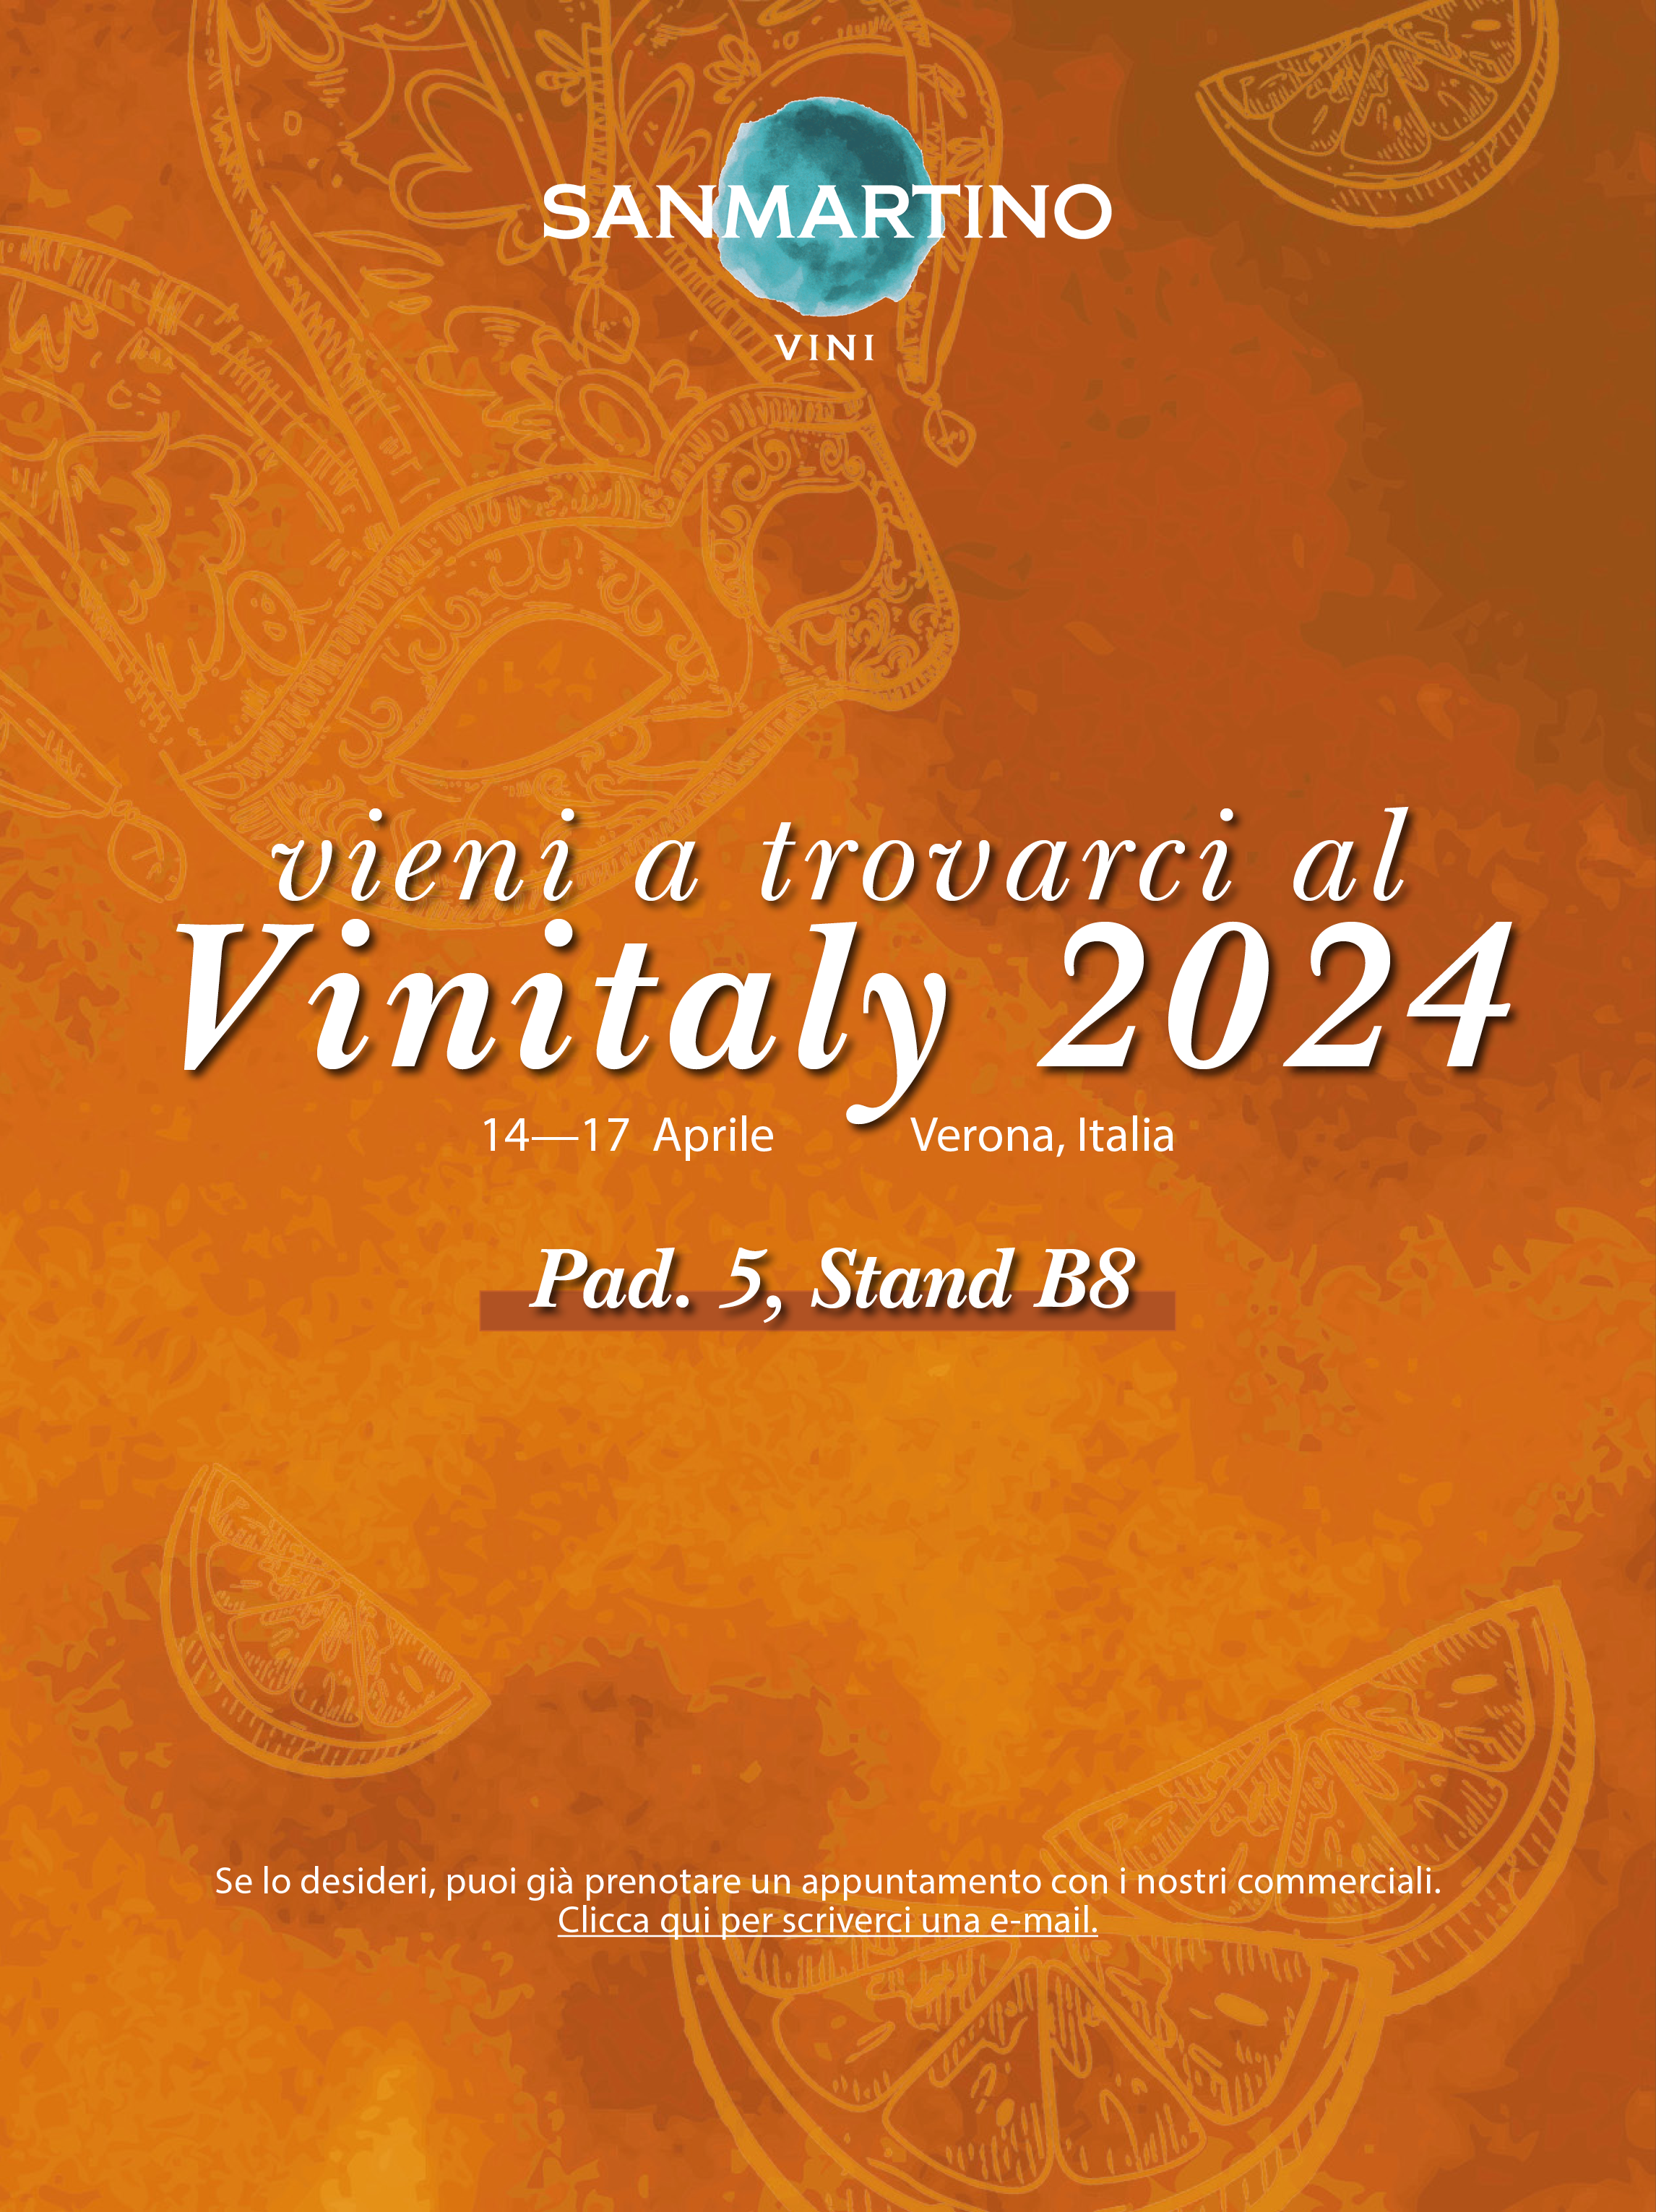 Come visit us at Vinitaly 2024